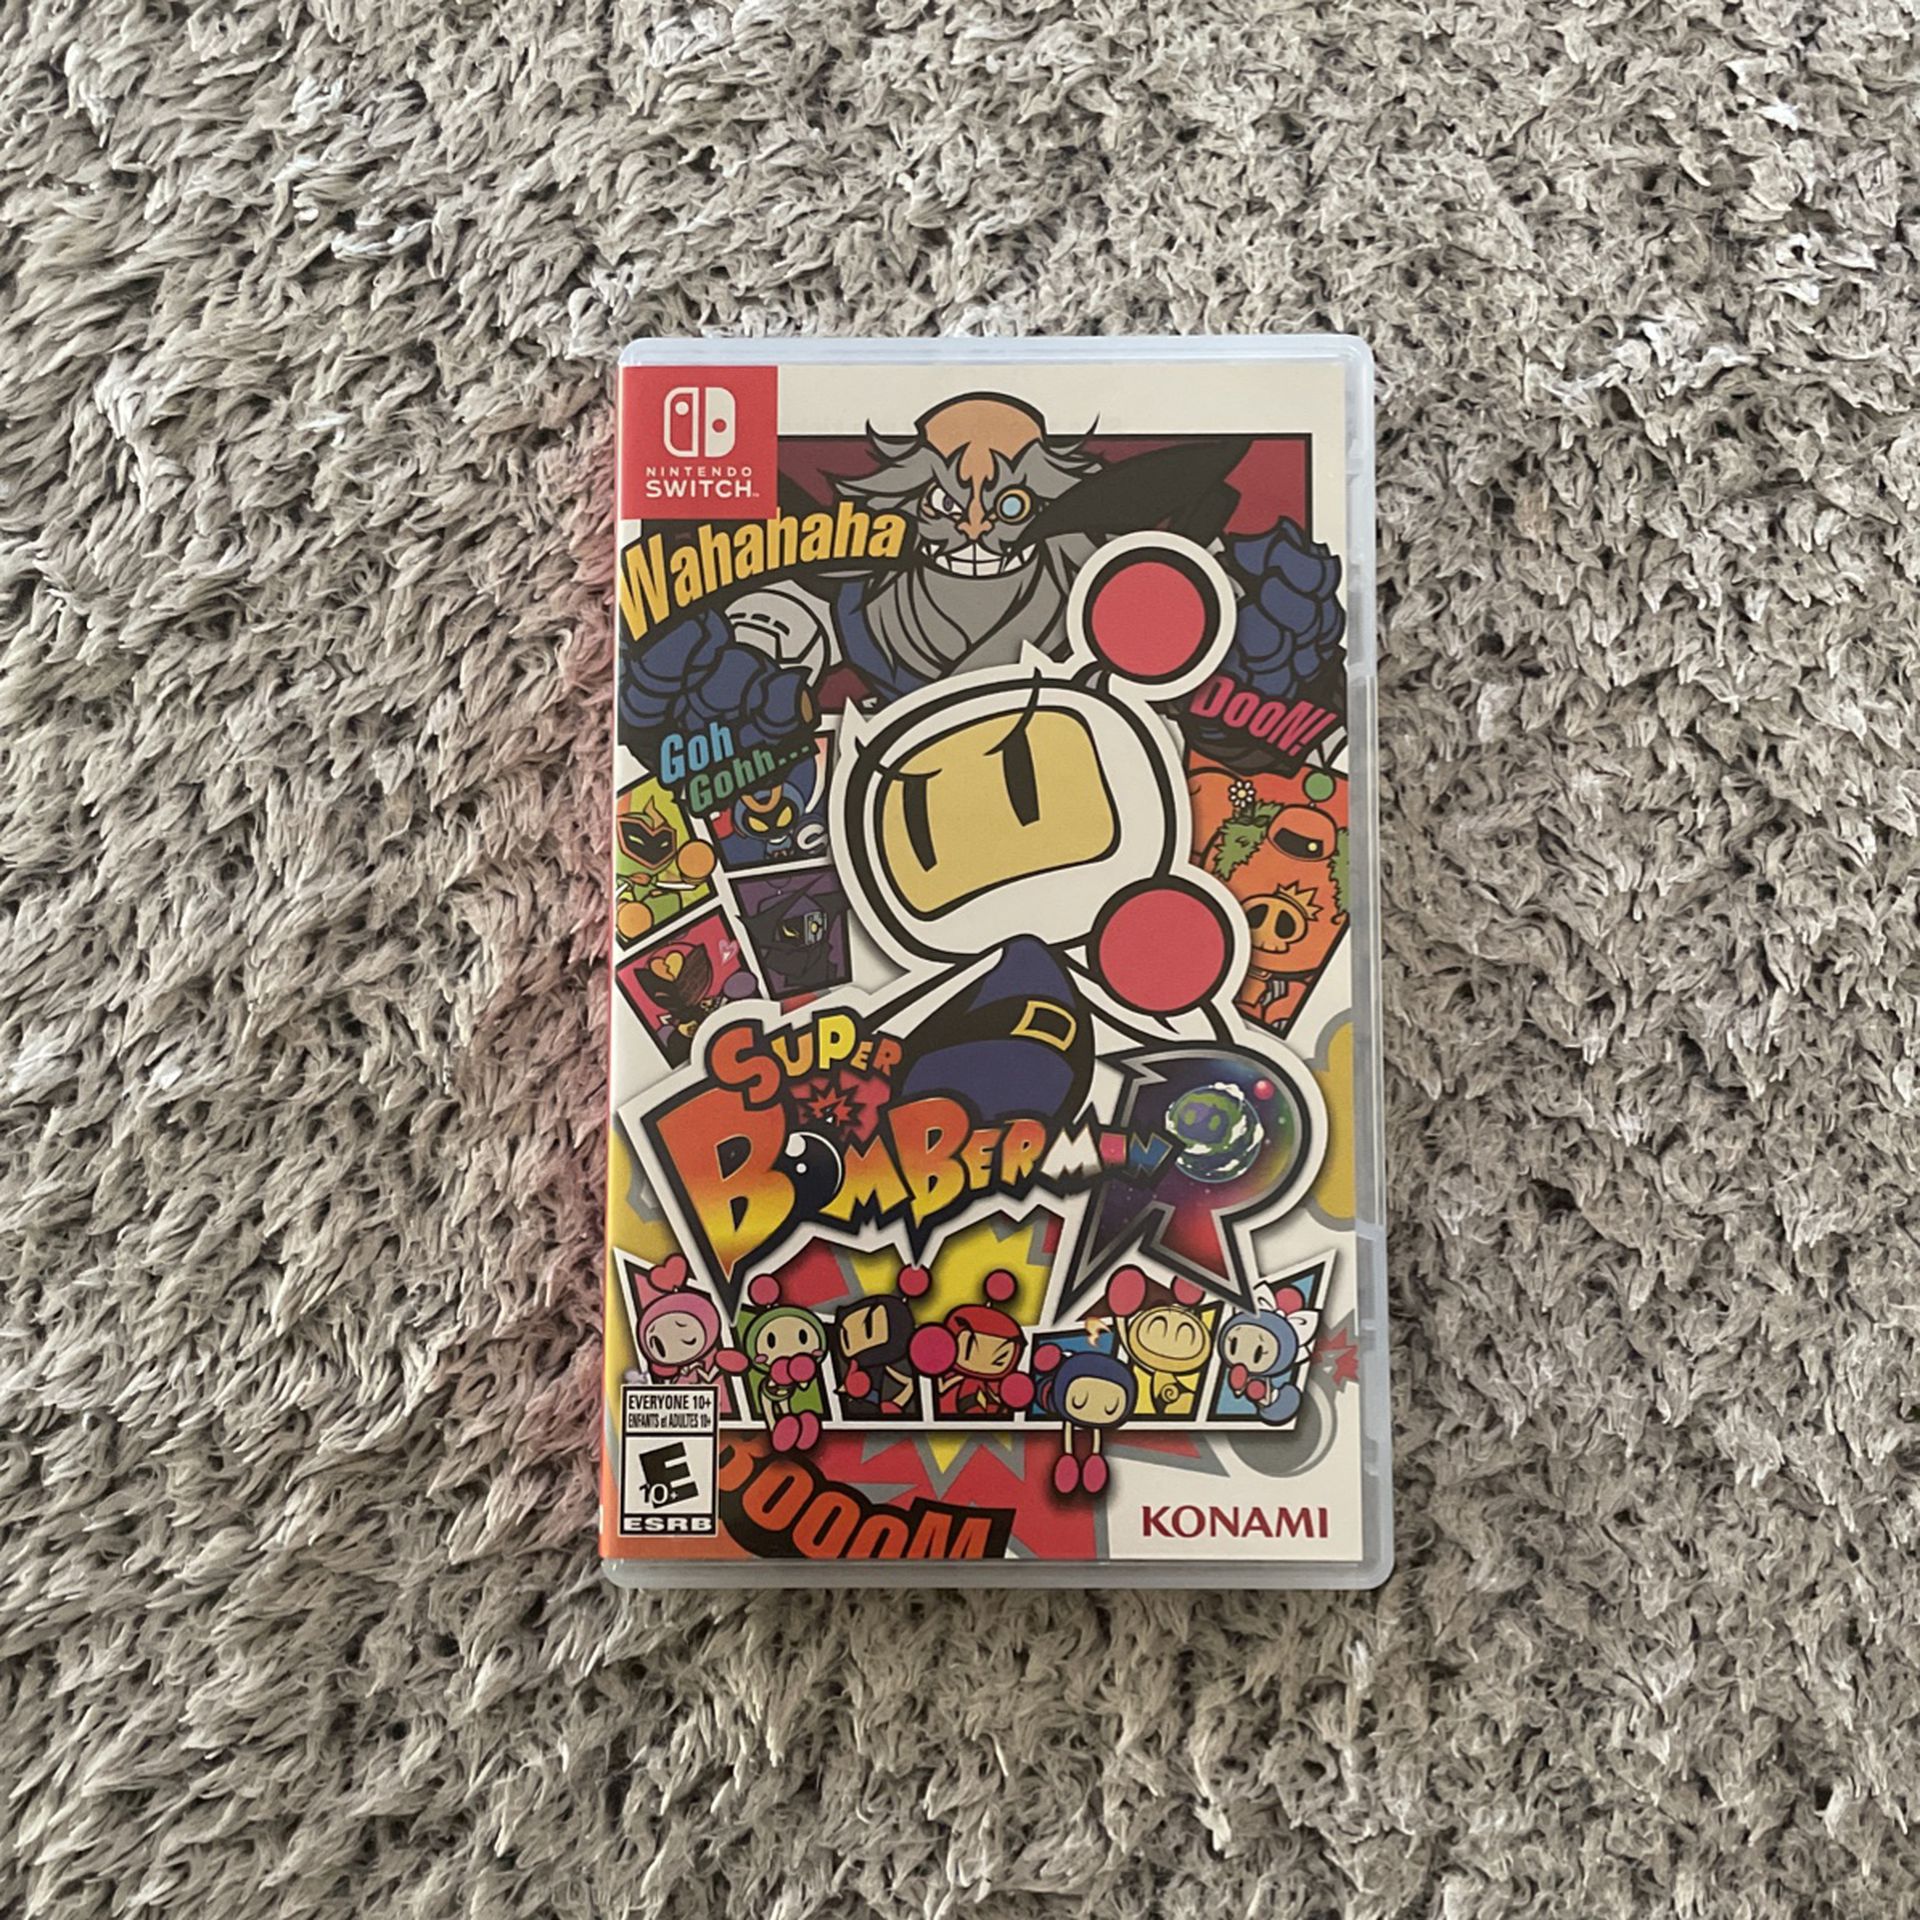 How do you control Super Bomberman R on a Nintendo Switch? – KONAMI Games